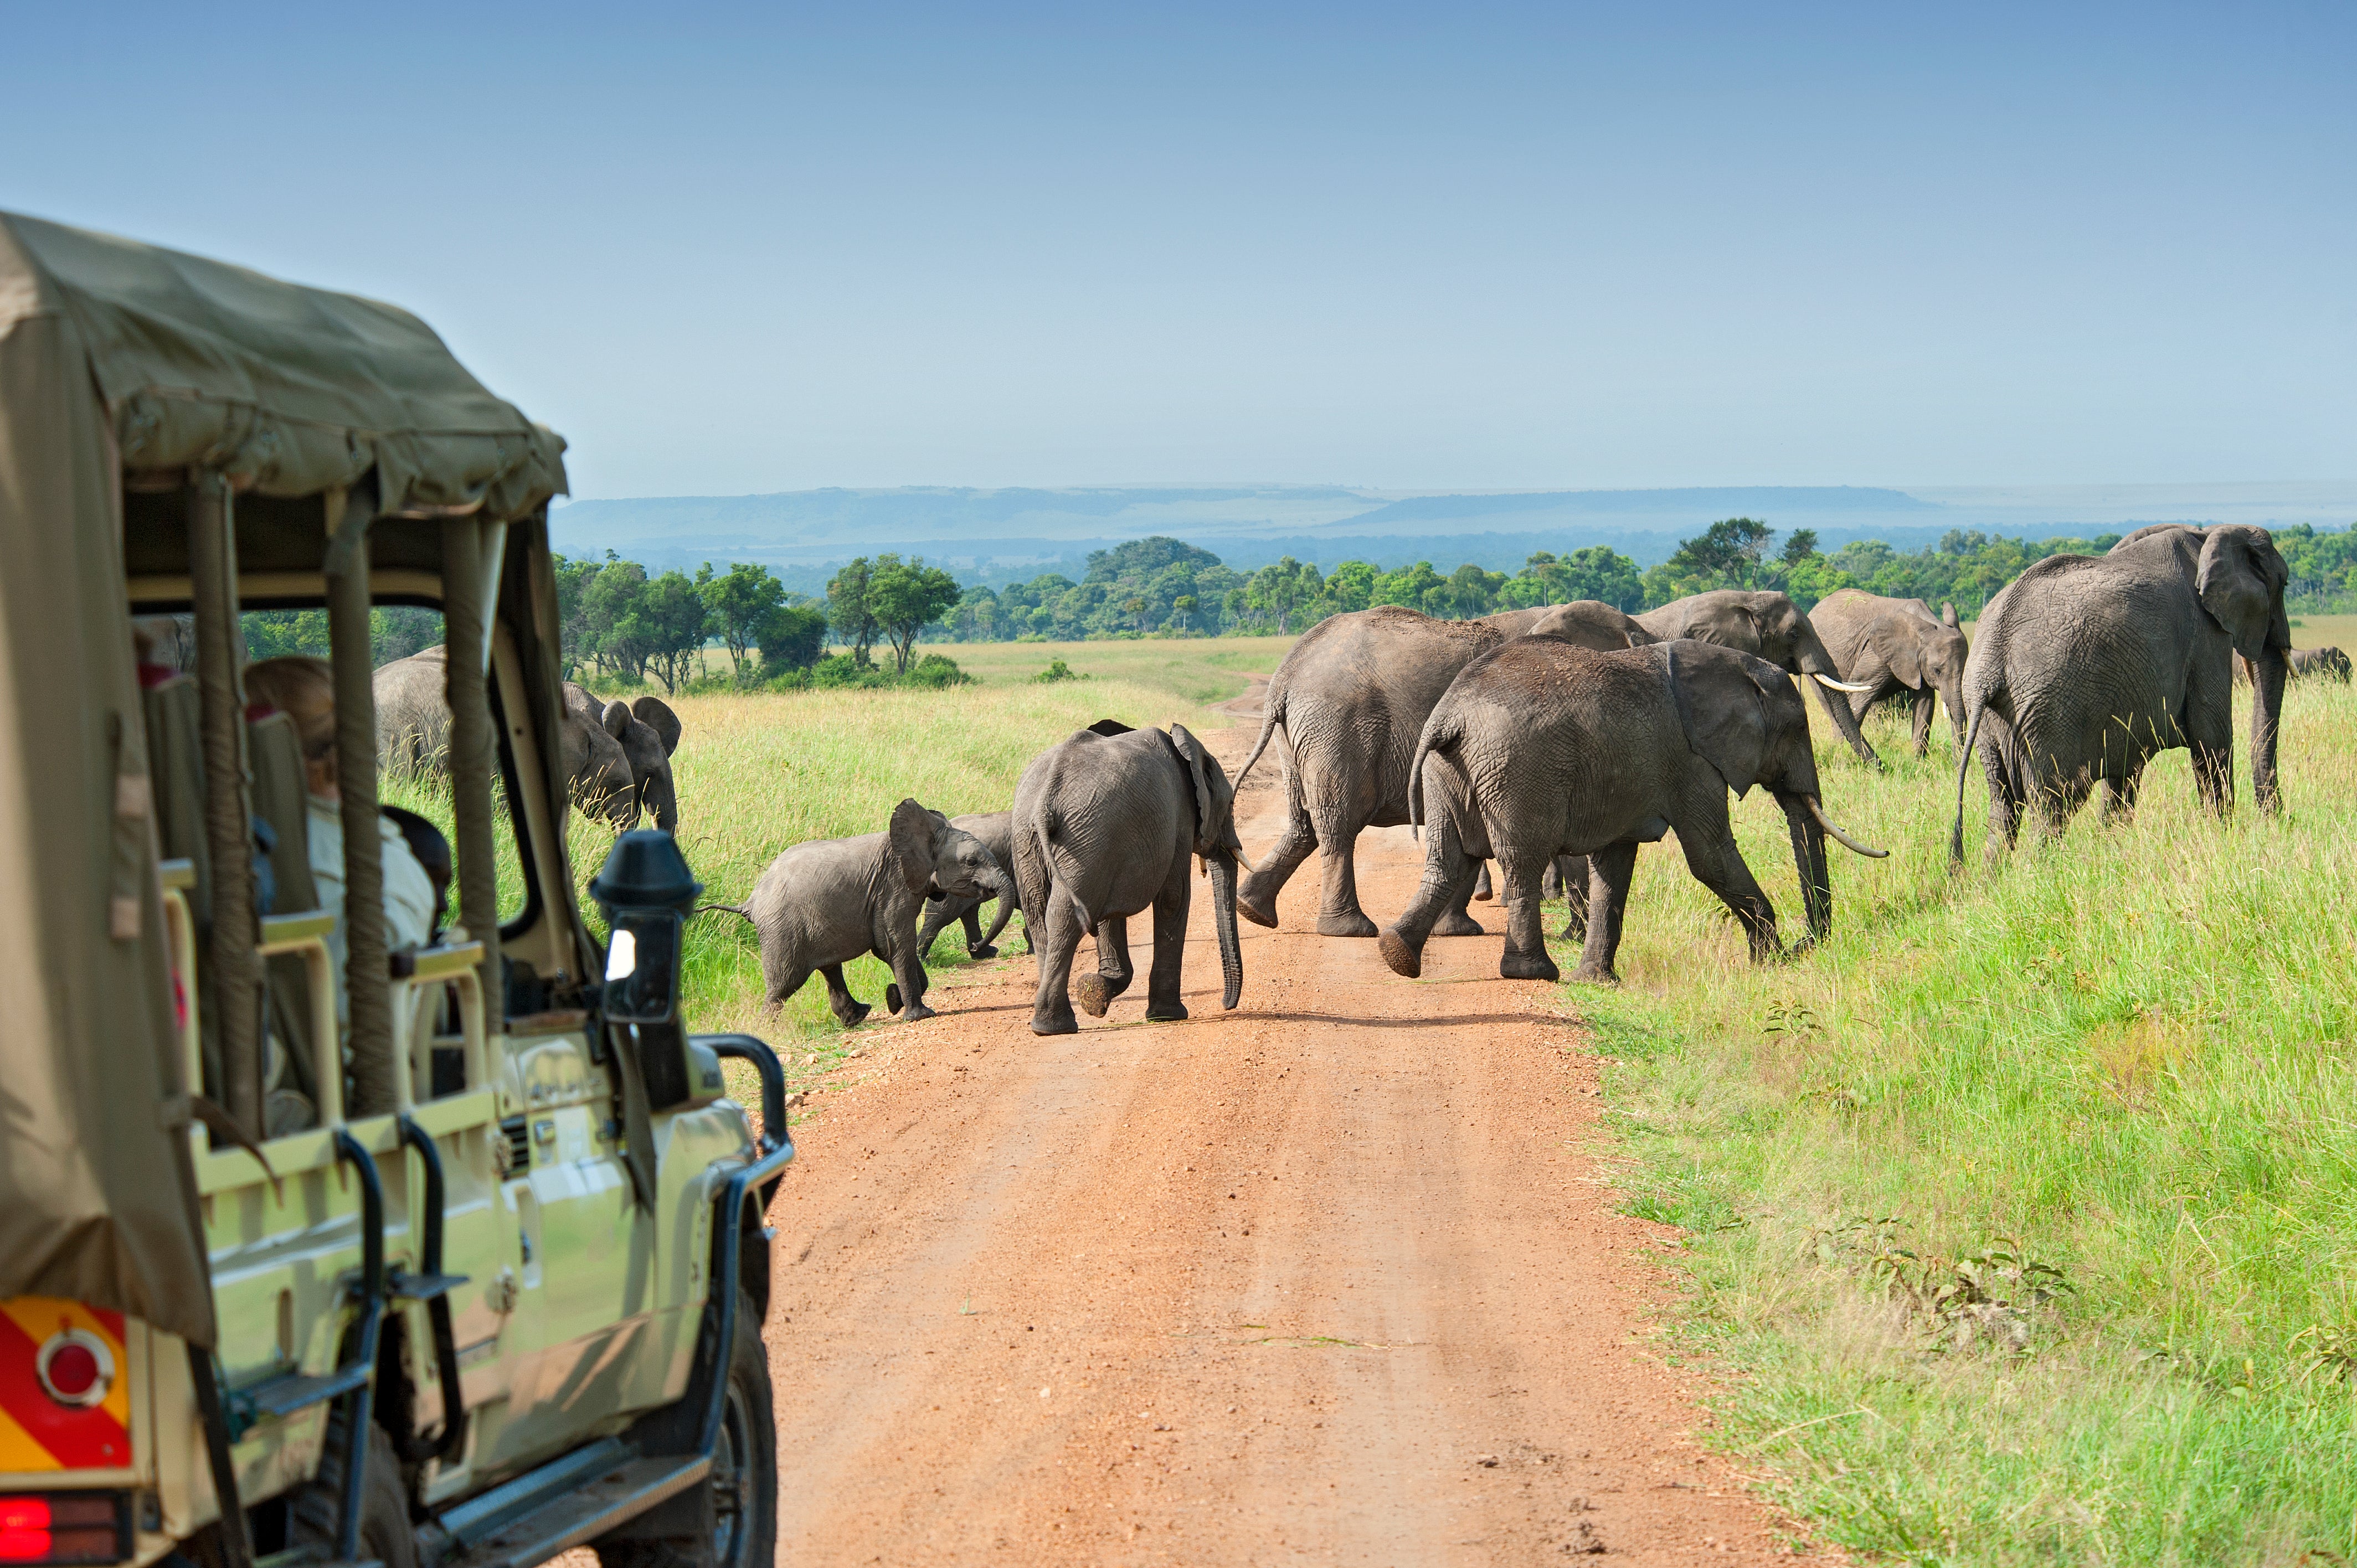 Animal lovers can safari with elephants in the Masai Mara